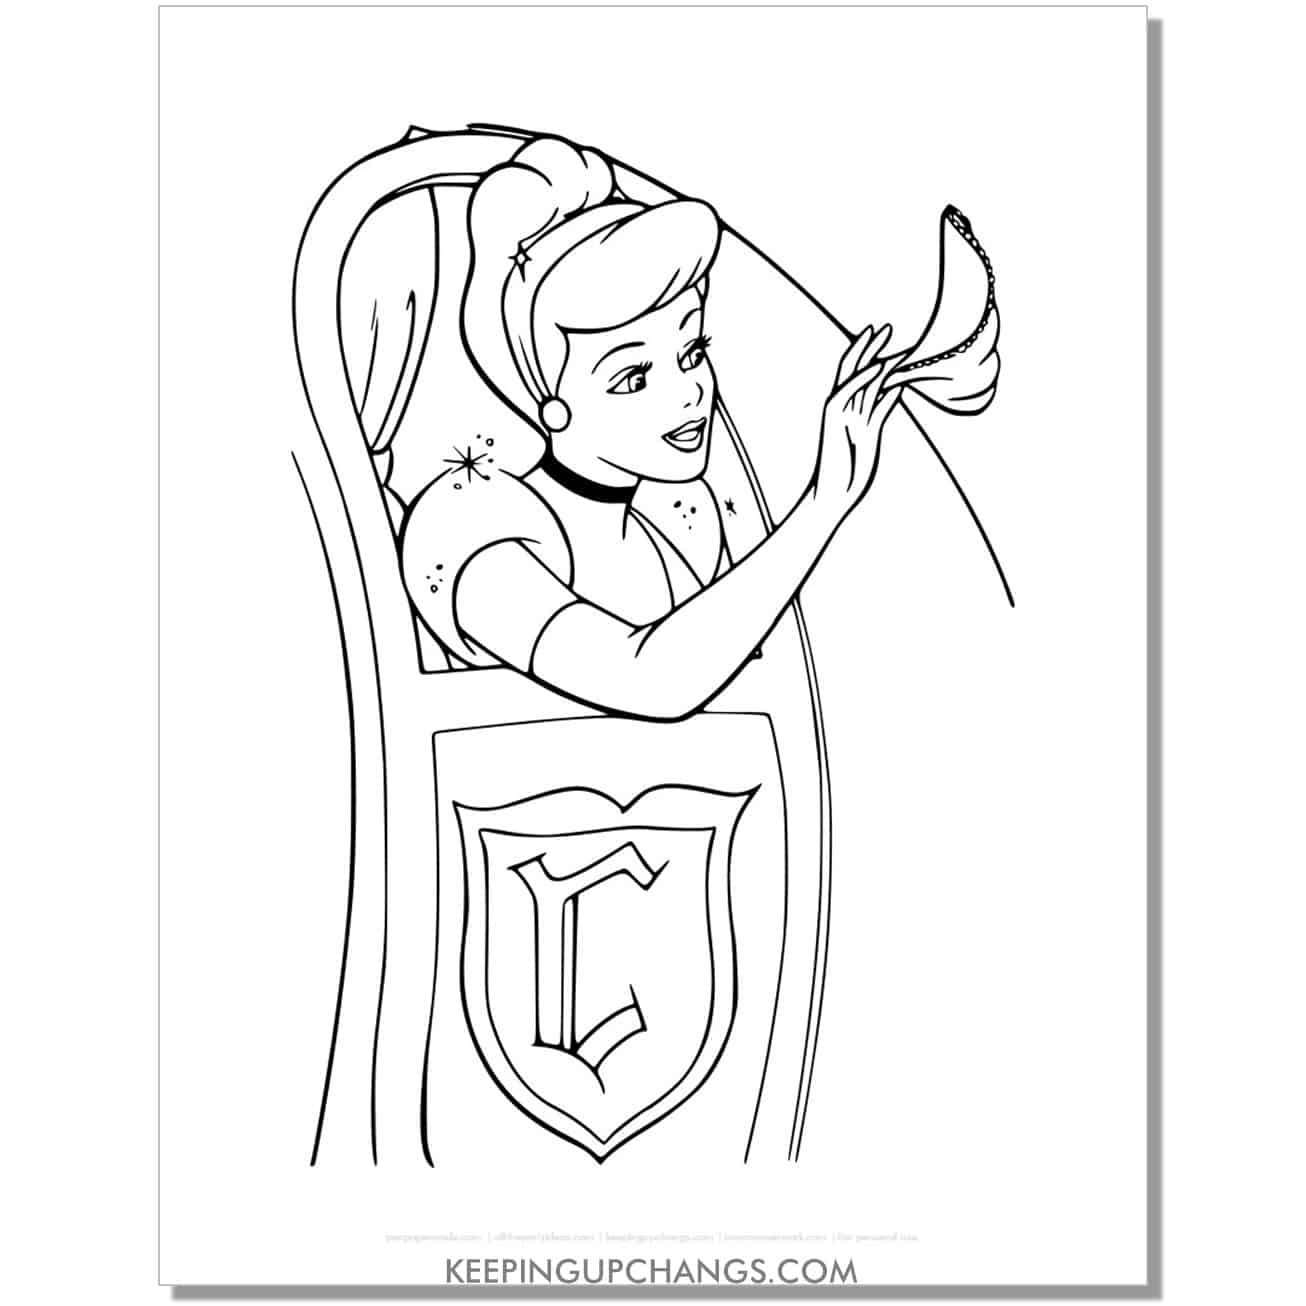 cinderella waving handkerchief from pumpkin carriage window coloring page, sheet.